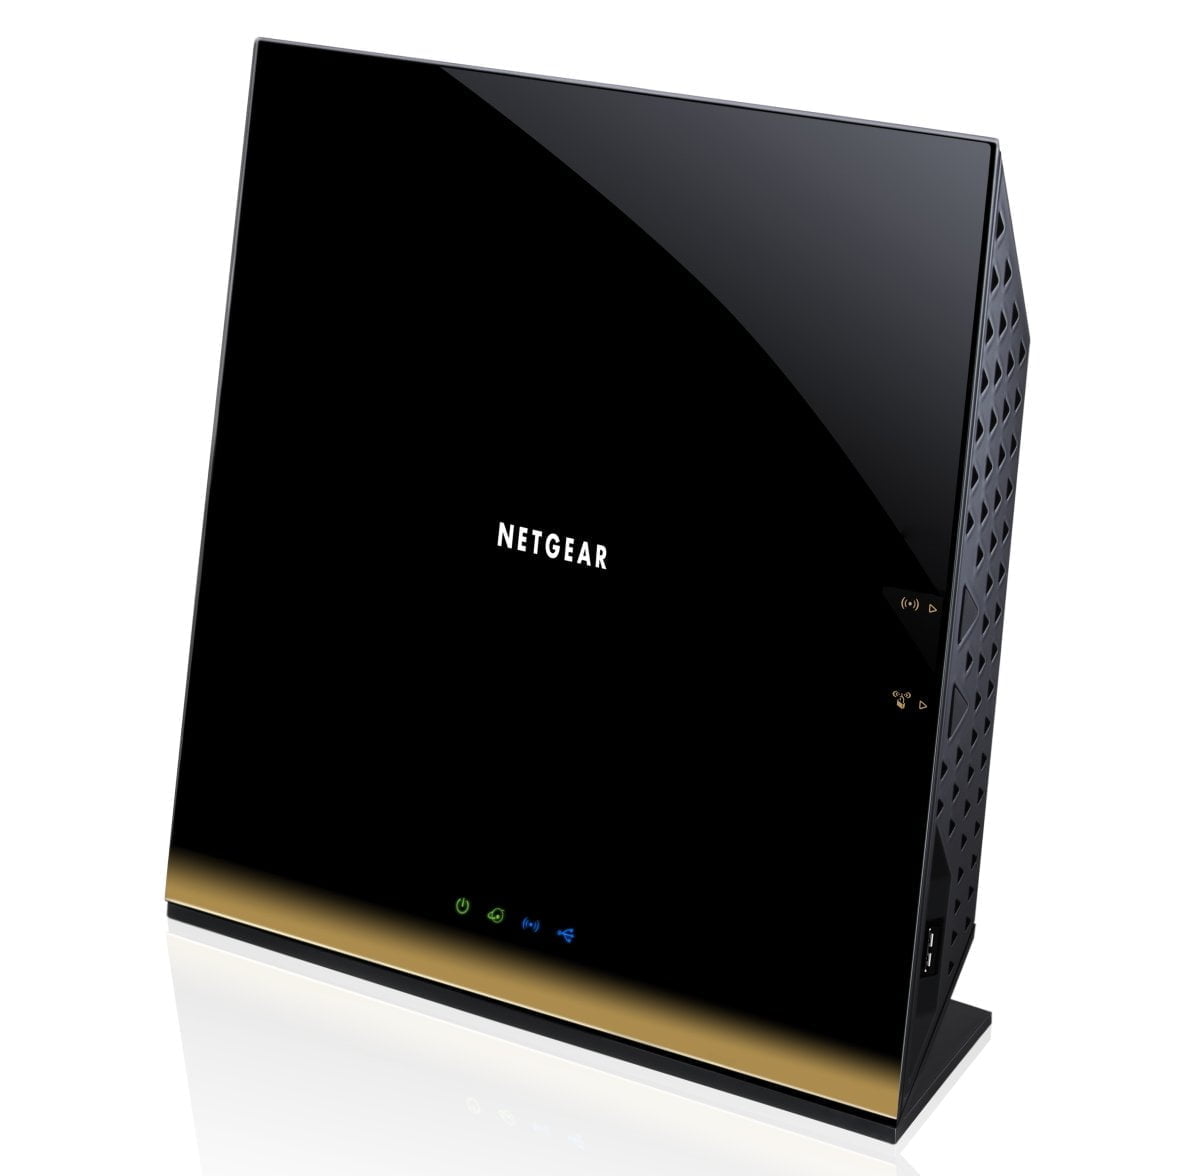 Review: Netgear R6300 router 21